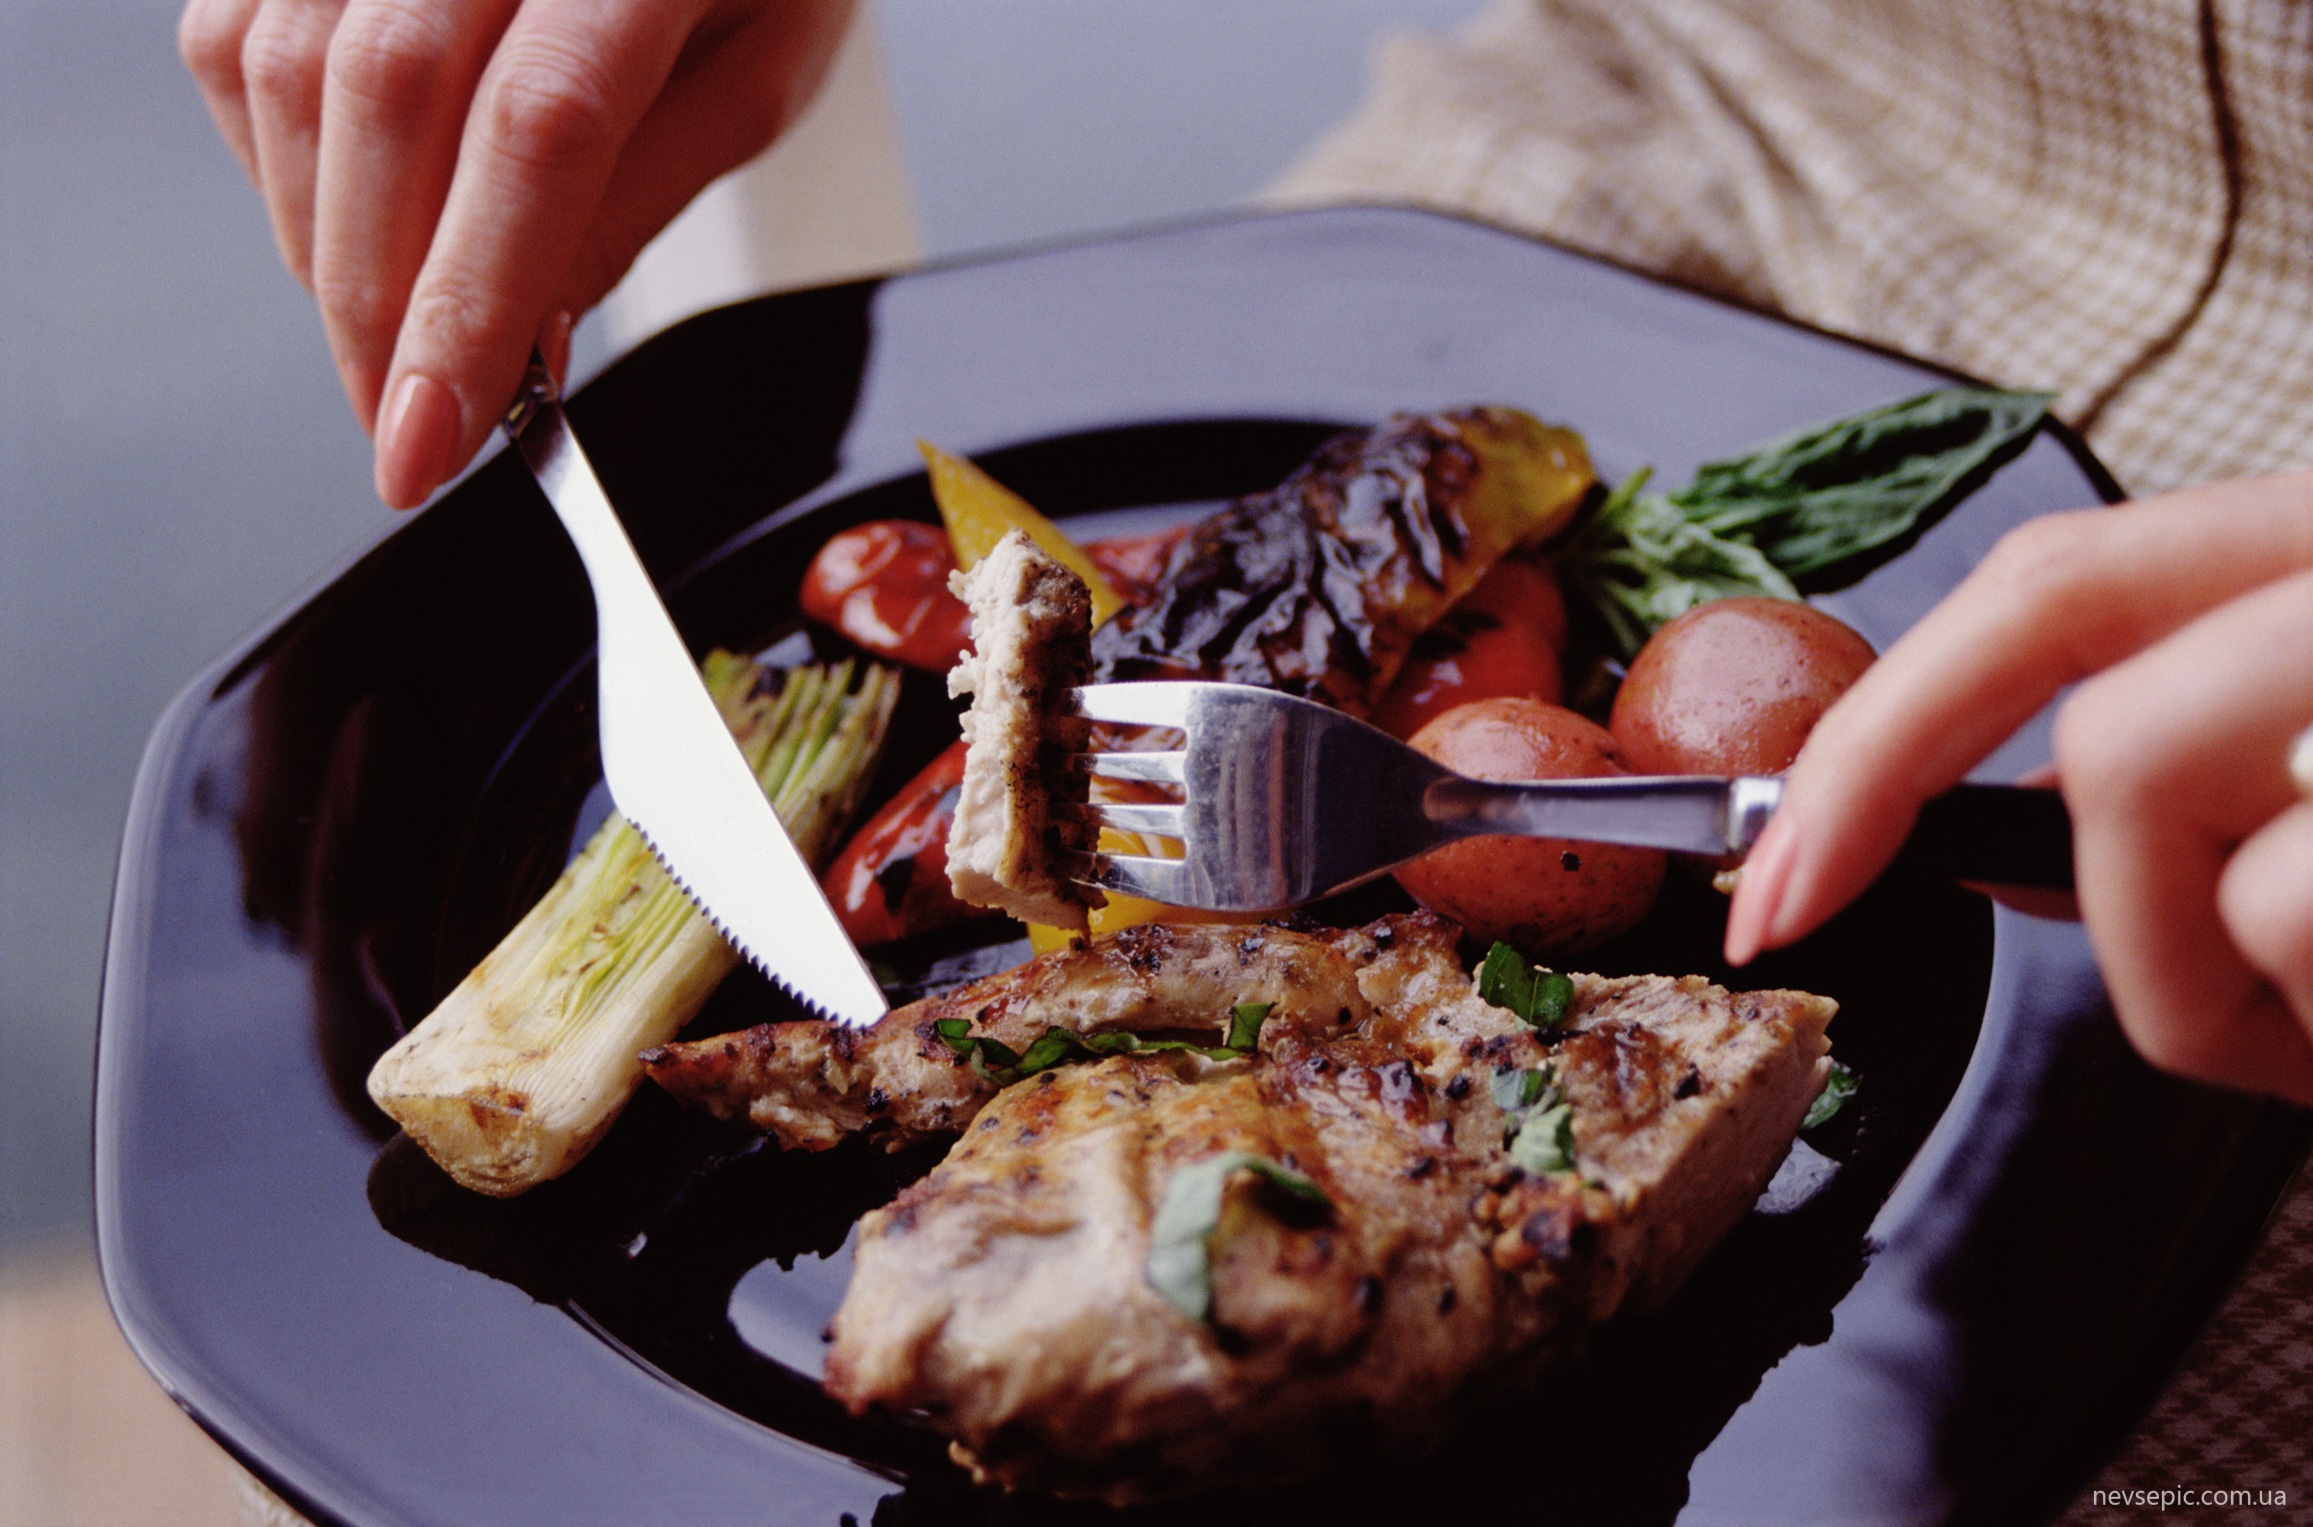 Мясо едят руками. Блюда из человеческого мяса. Еда с вилкой и ножом. Рука с едой. Кушать вилкой и ножом.